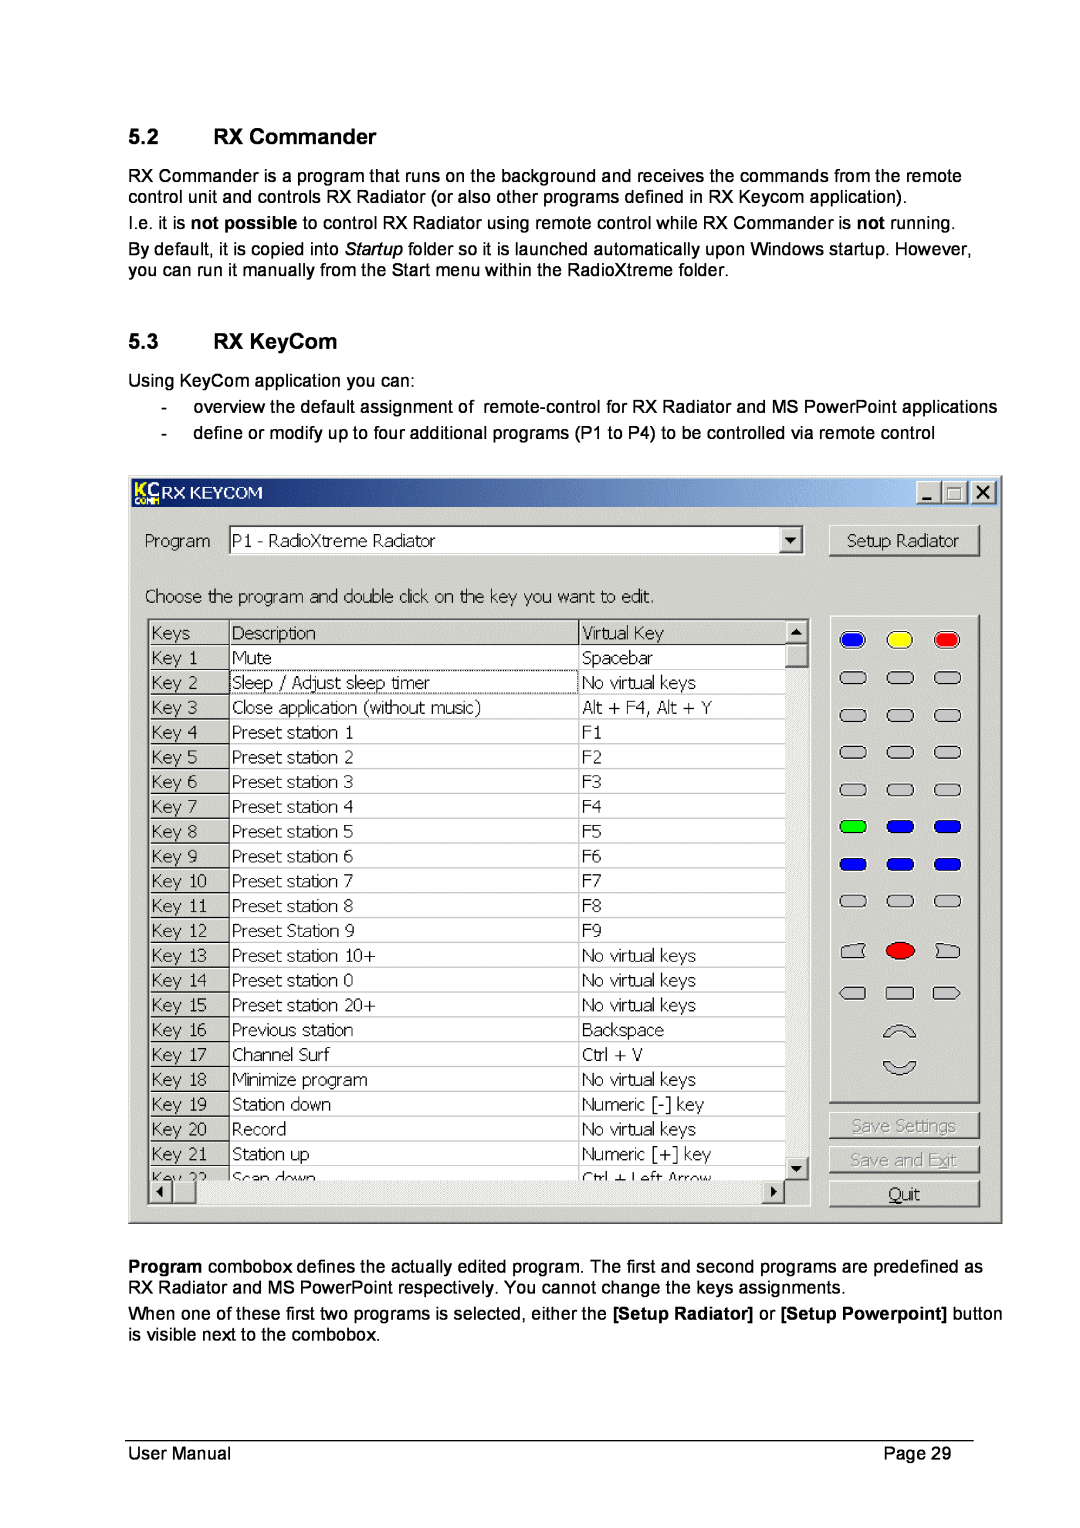 Philips FMU-100 user manual 5.2RX Commander, 5.3RX KeyCom 